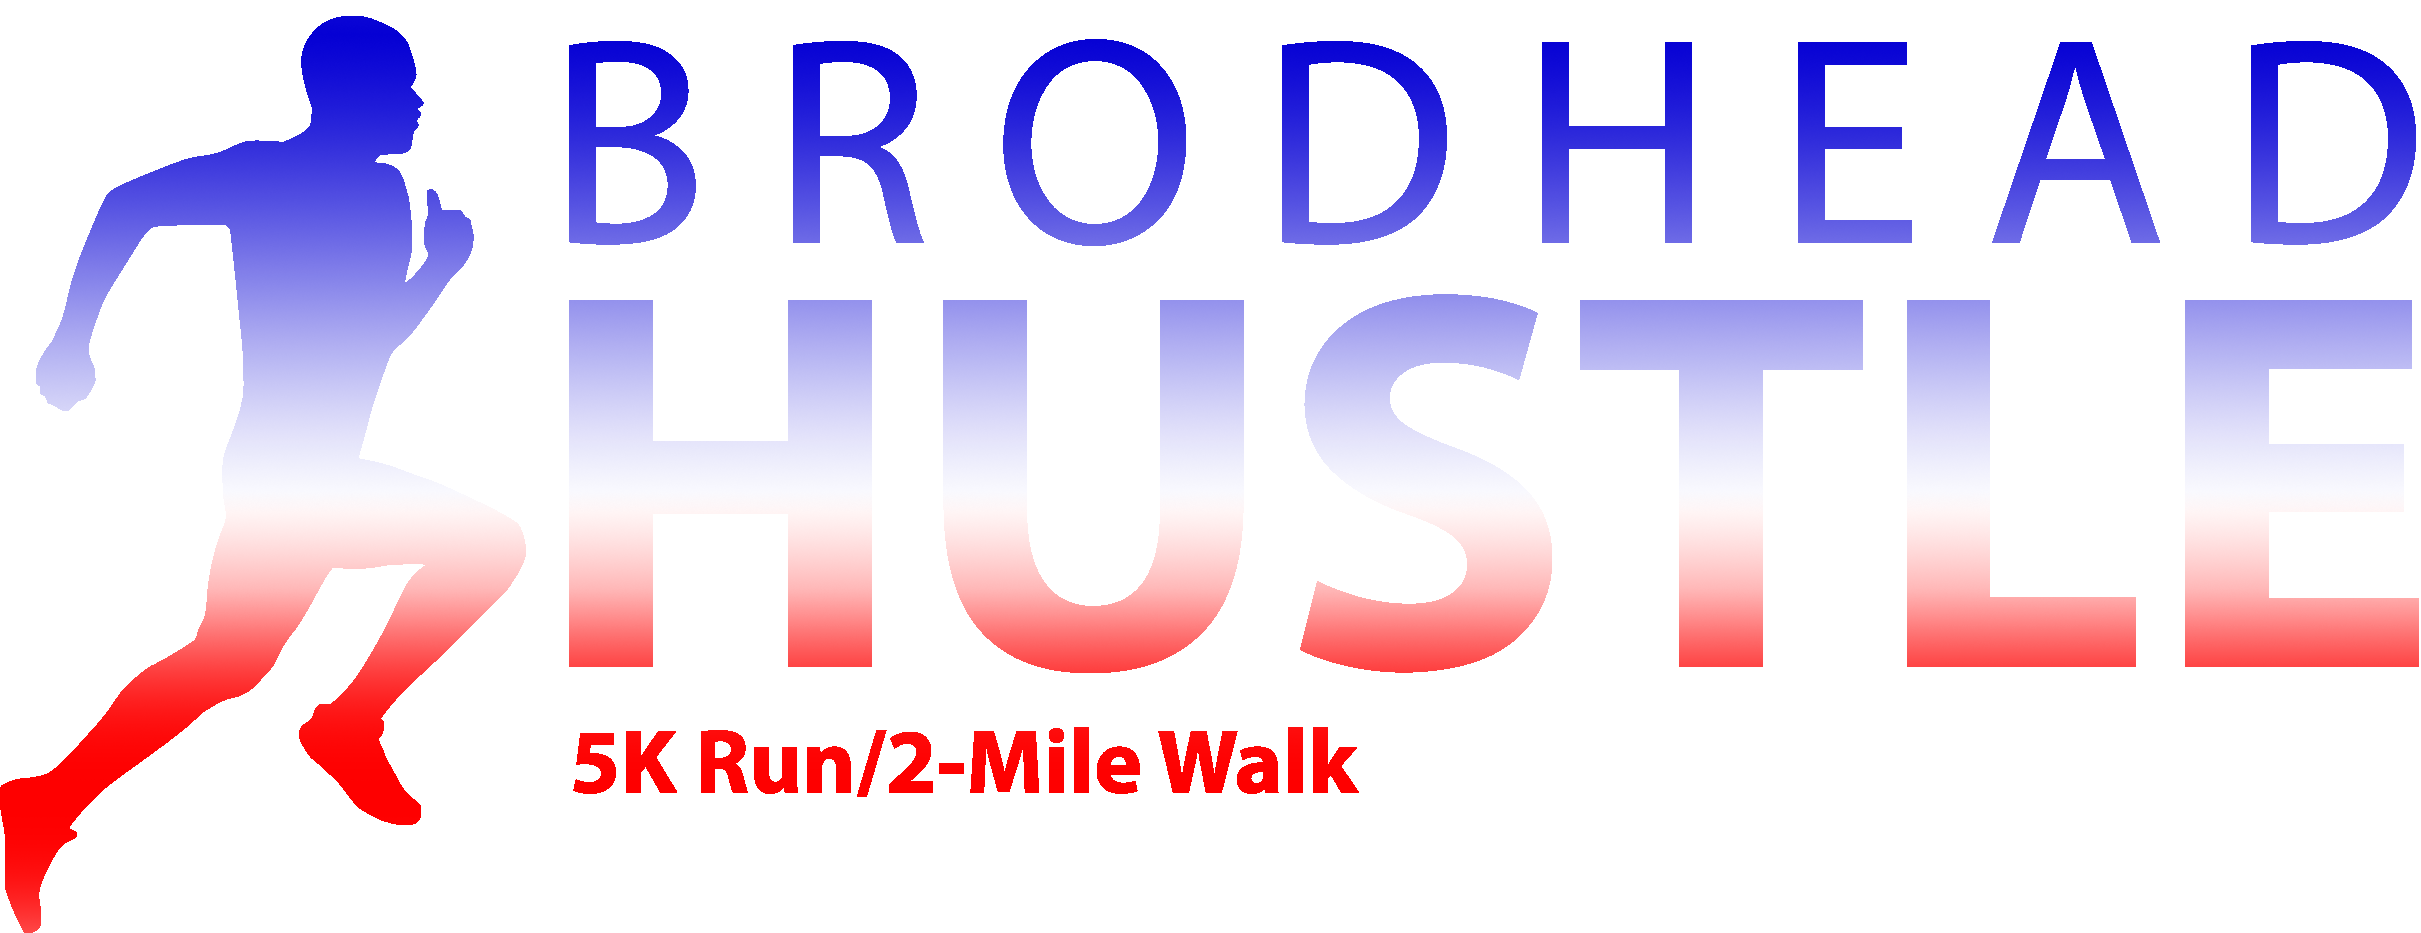 Brodhead Hustle 5K Run/Walk this Saturday